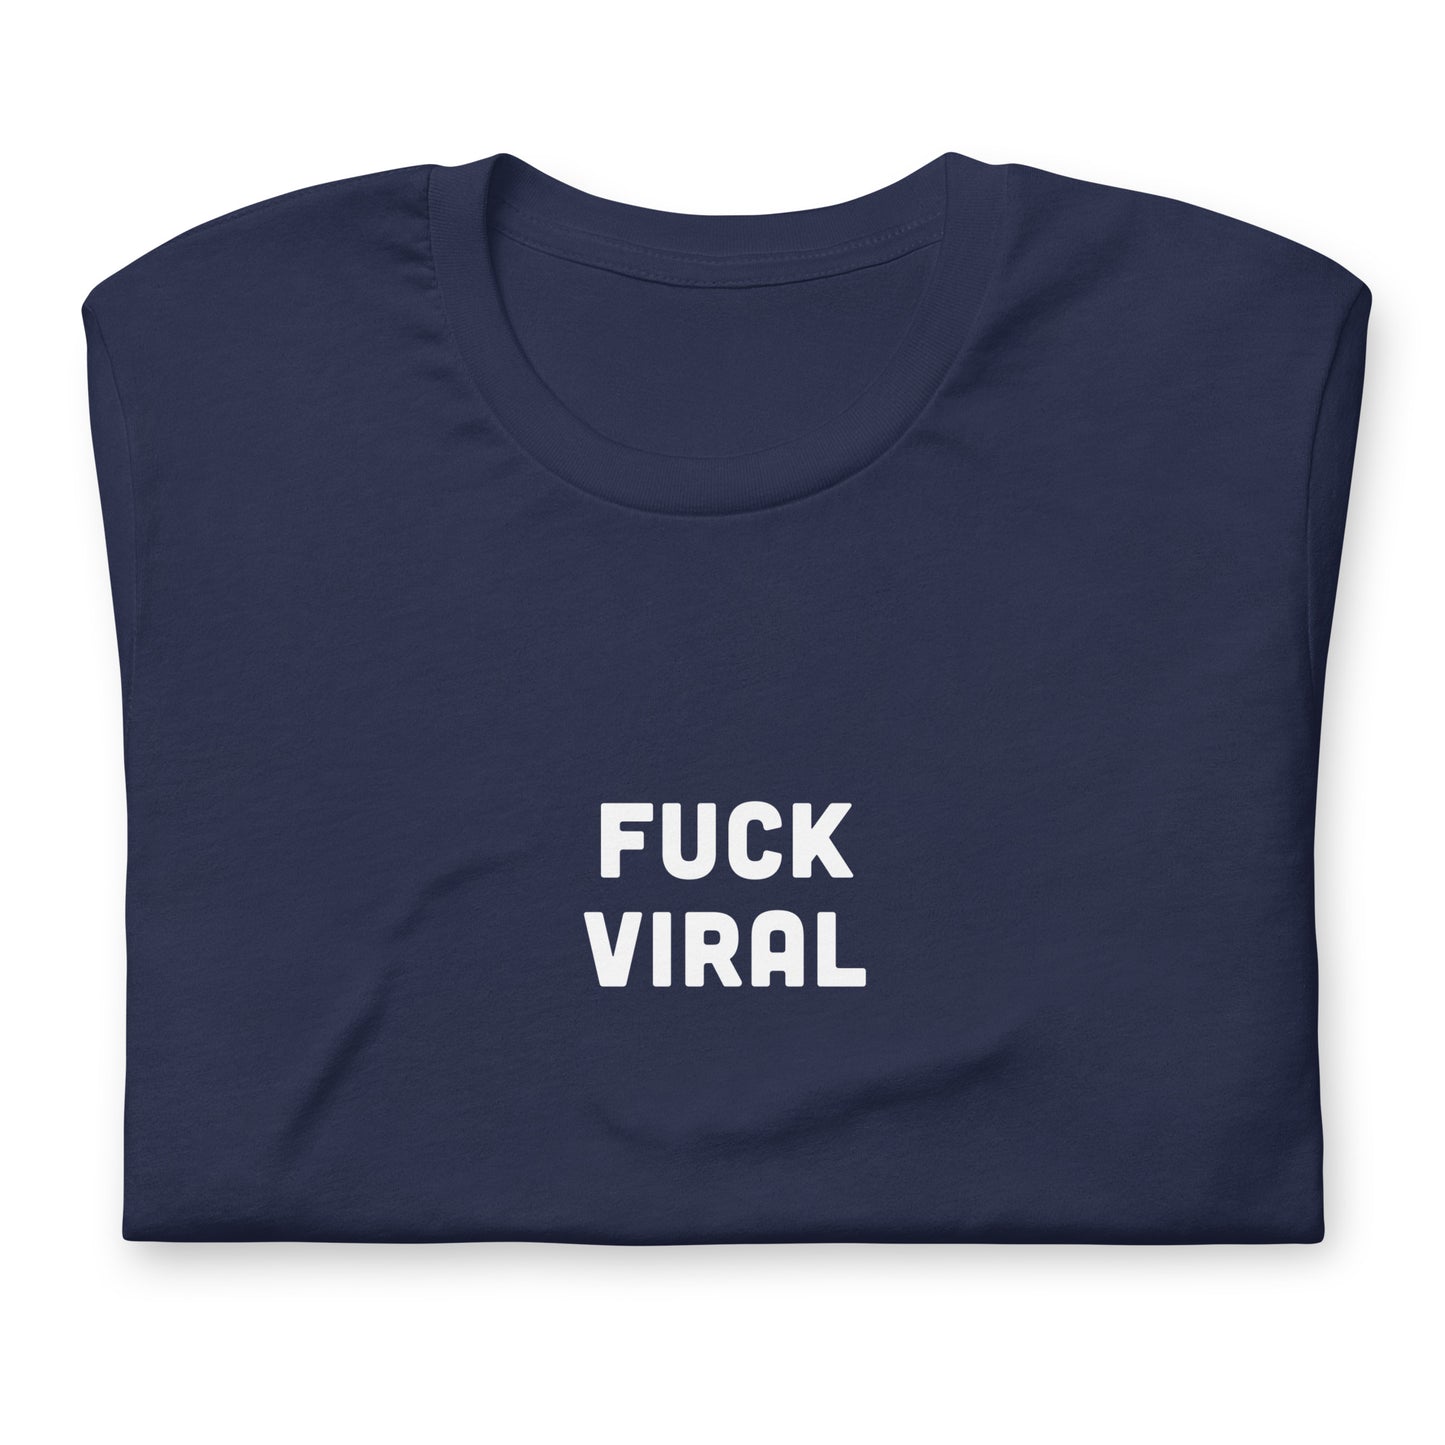 Fuck Viral T-Shirt Size M Color Black